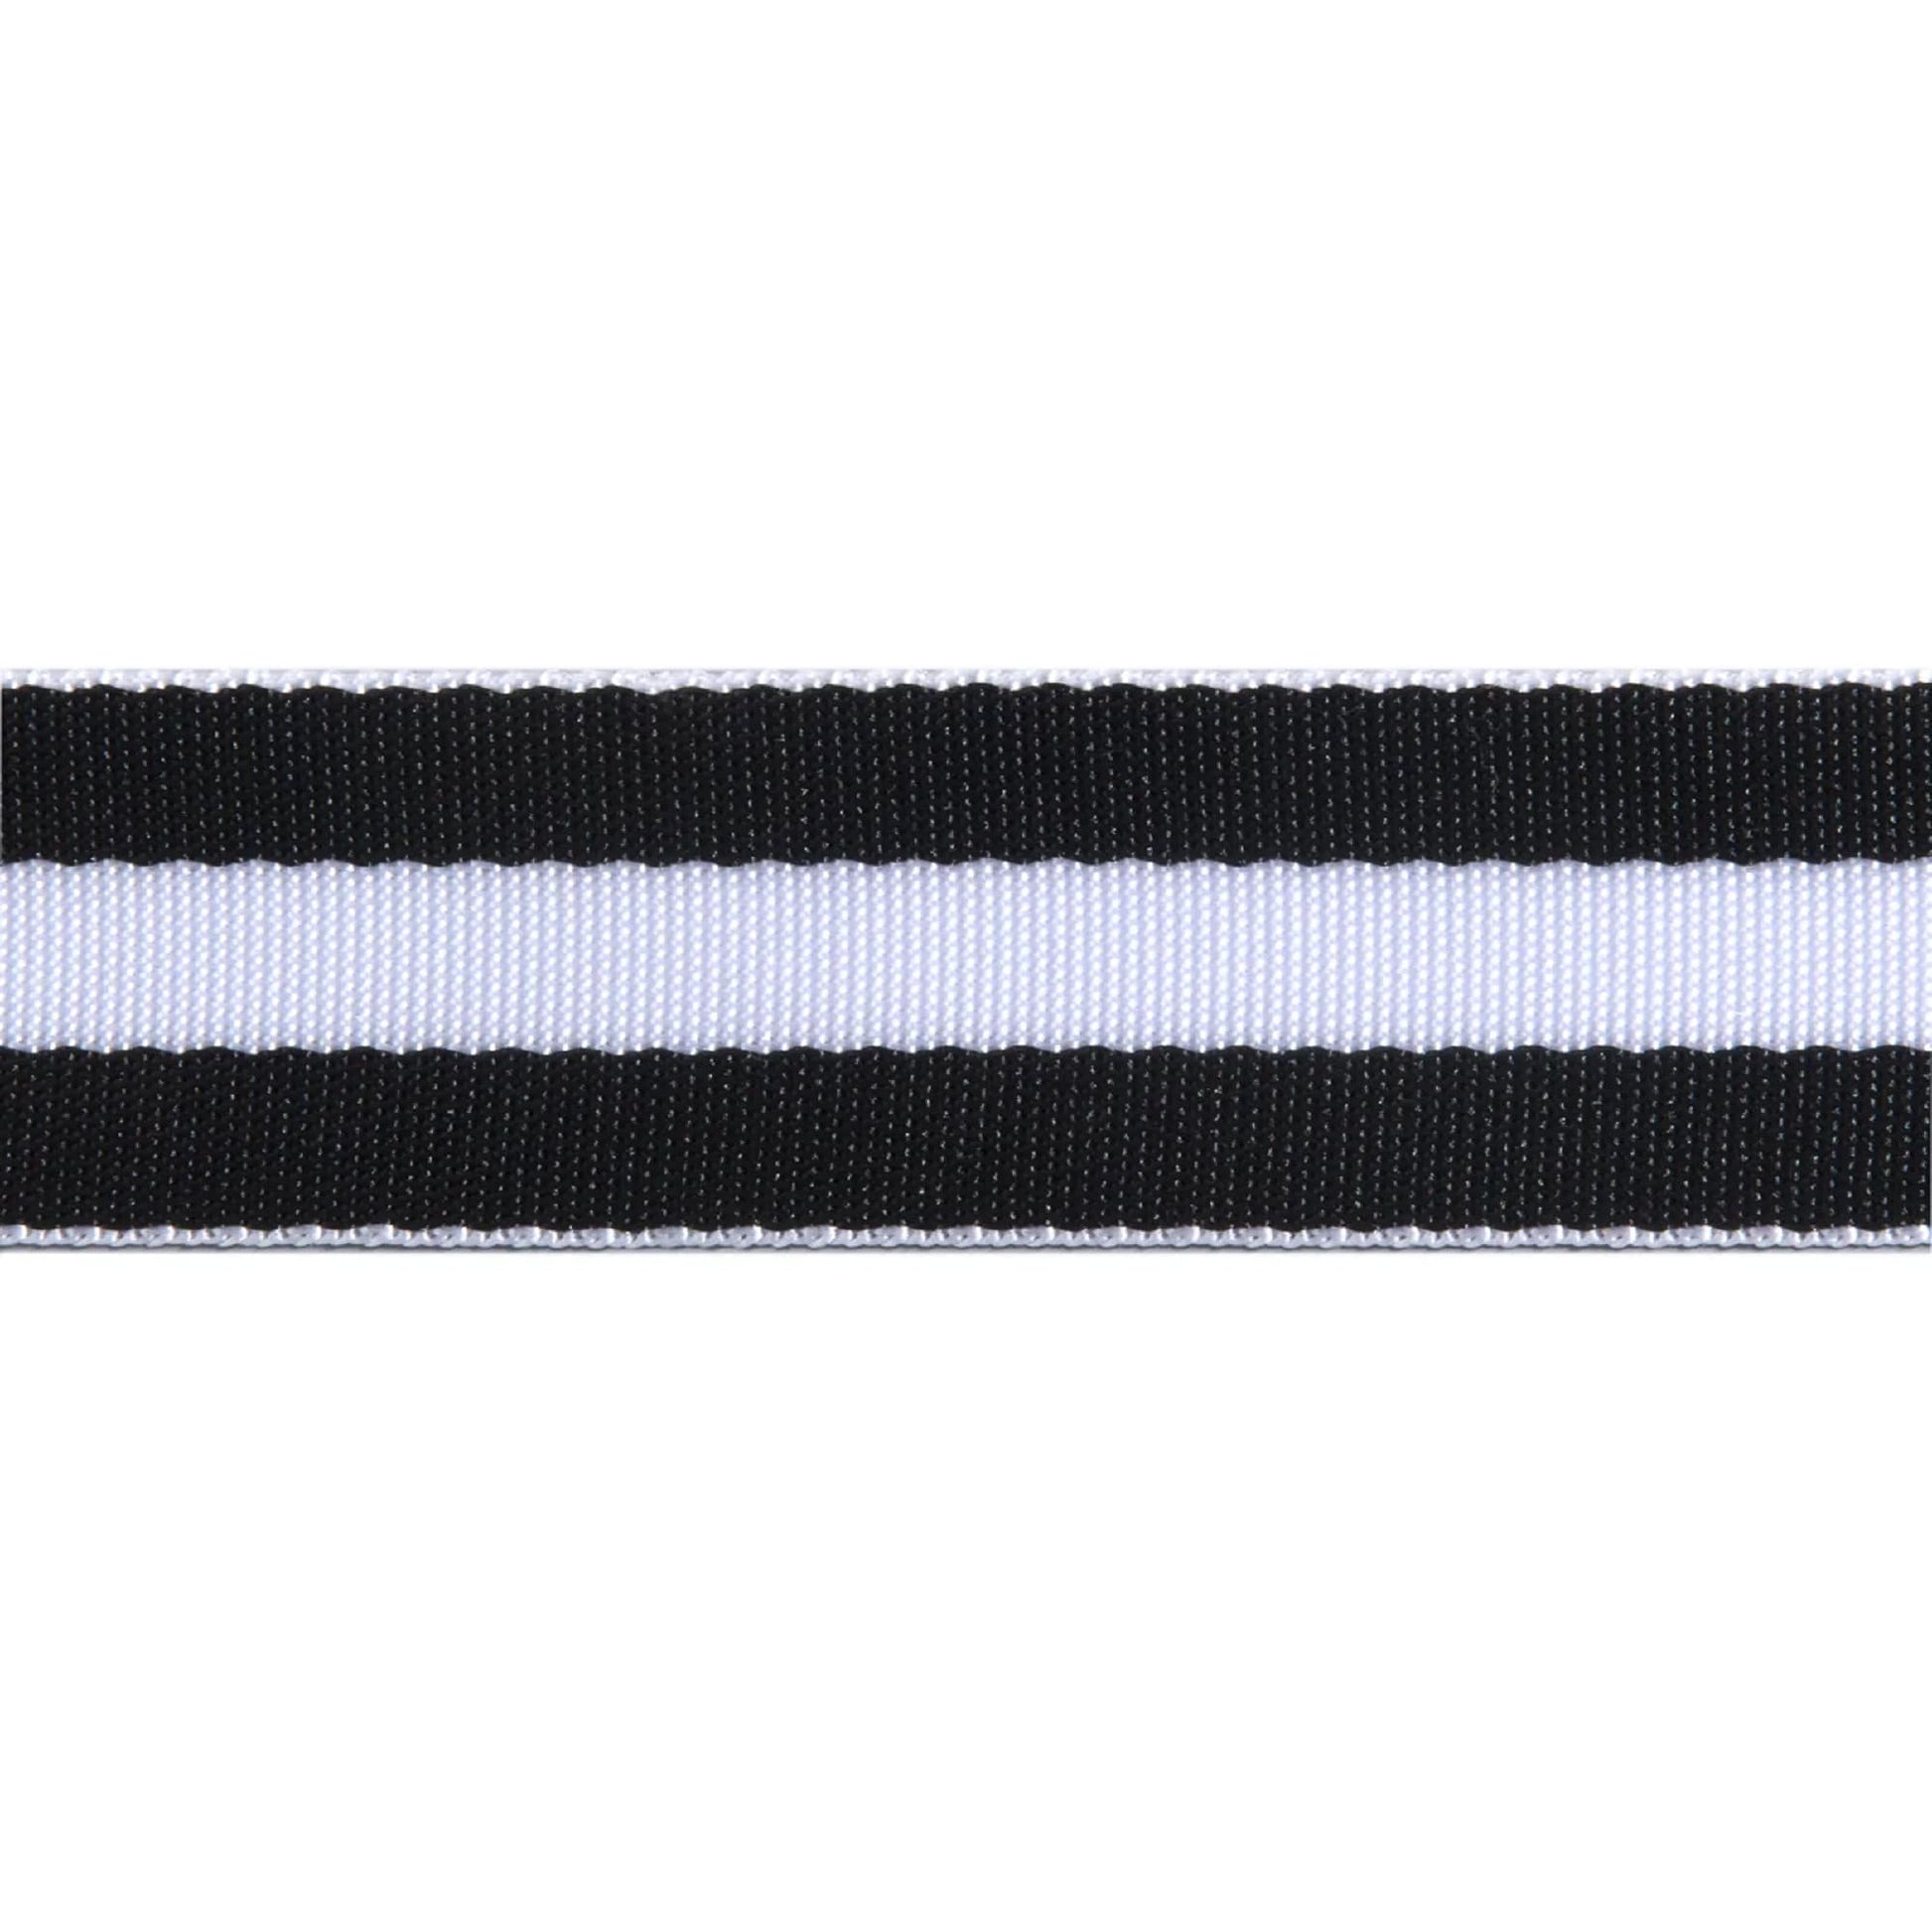 Tula Pink Nylon Webbing 1.5 Inch 38mm Black and White Renaissance Ribbons Fabric Fetish